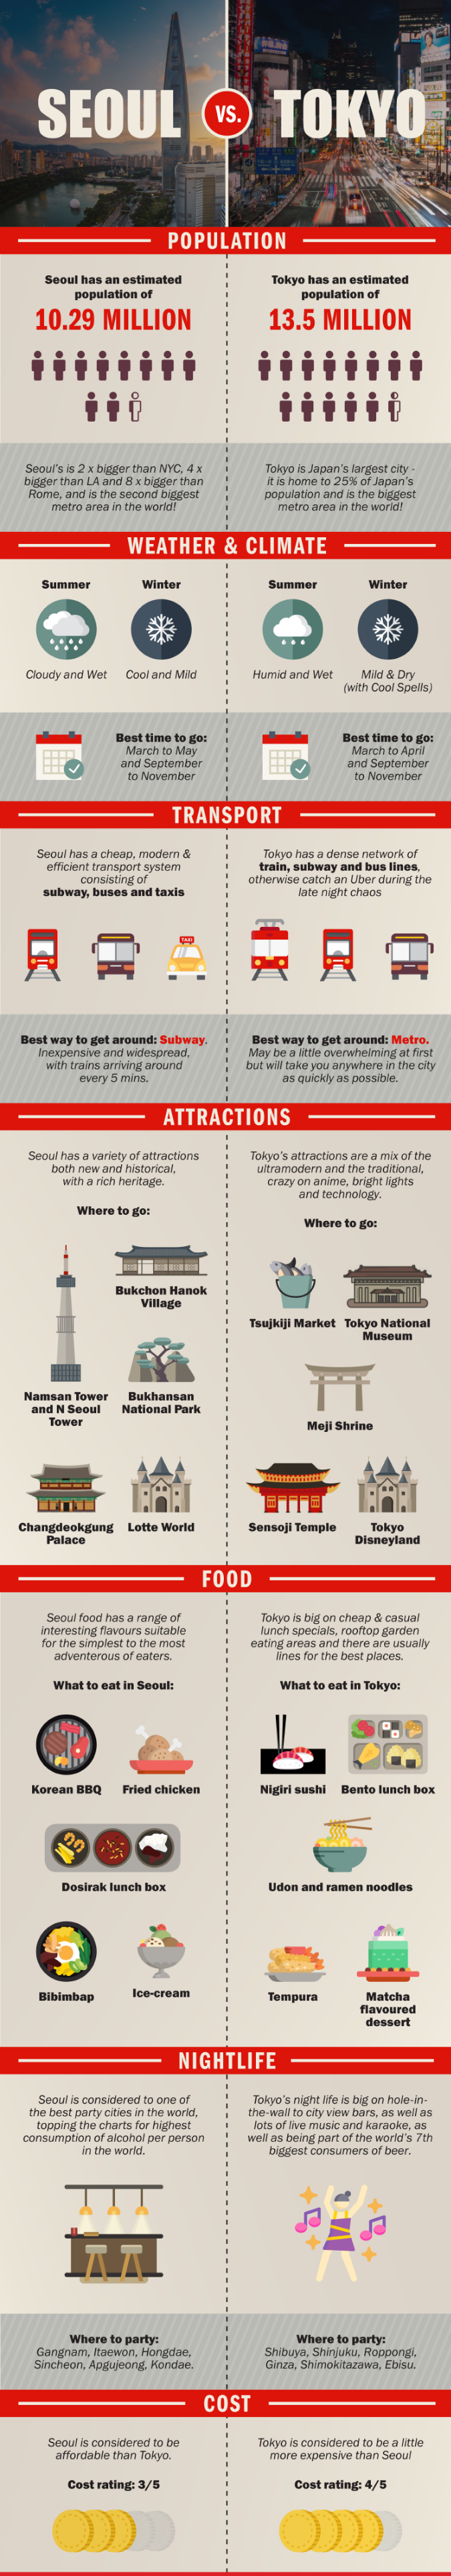 Seoul vs. Tokyo Infographic